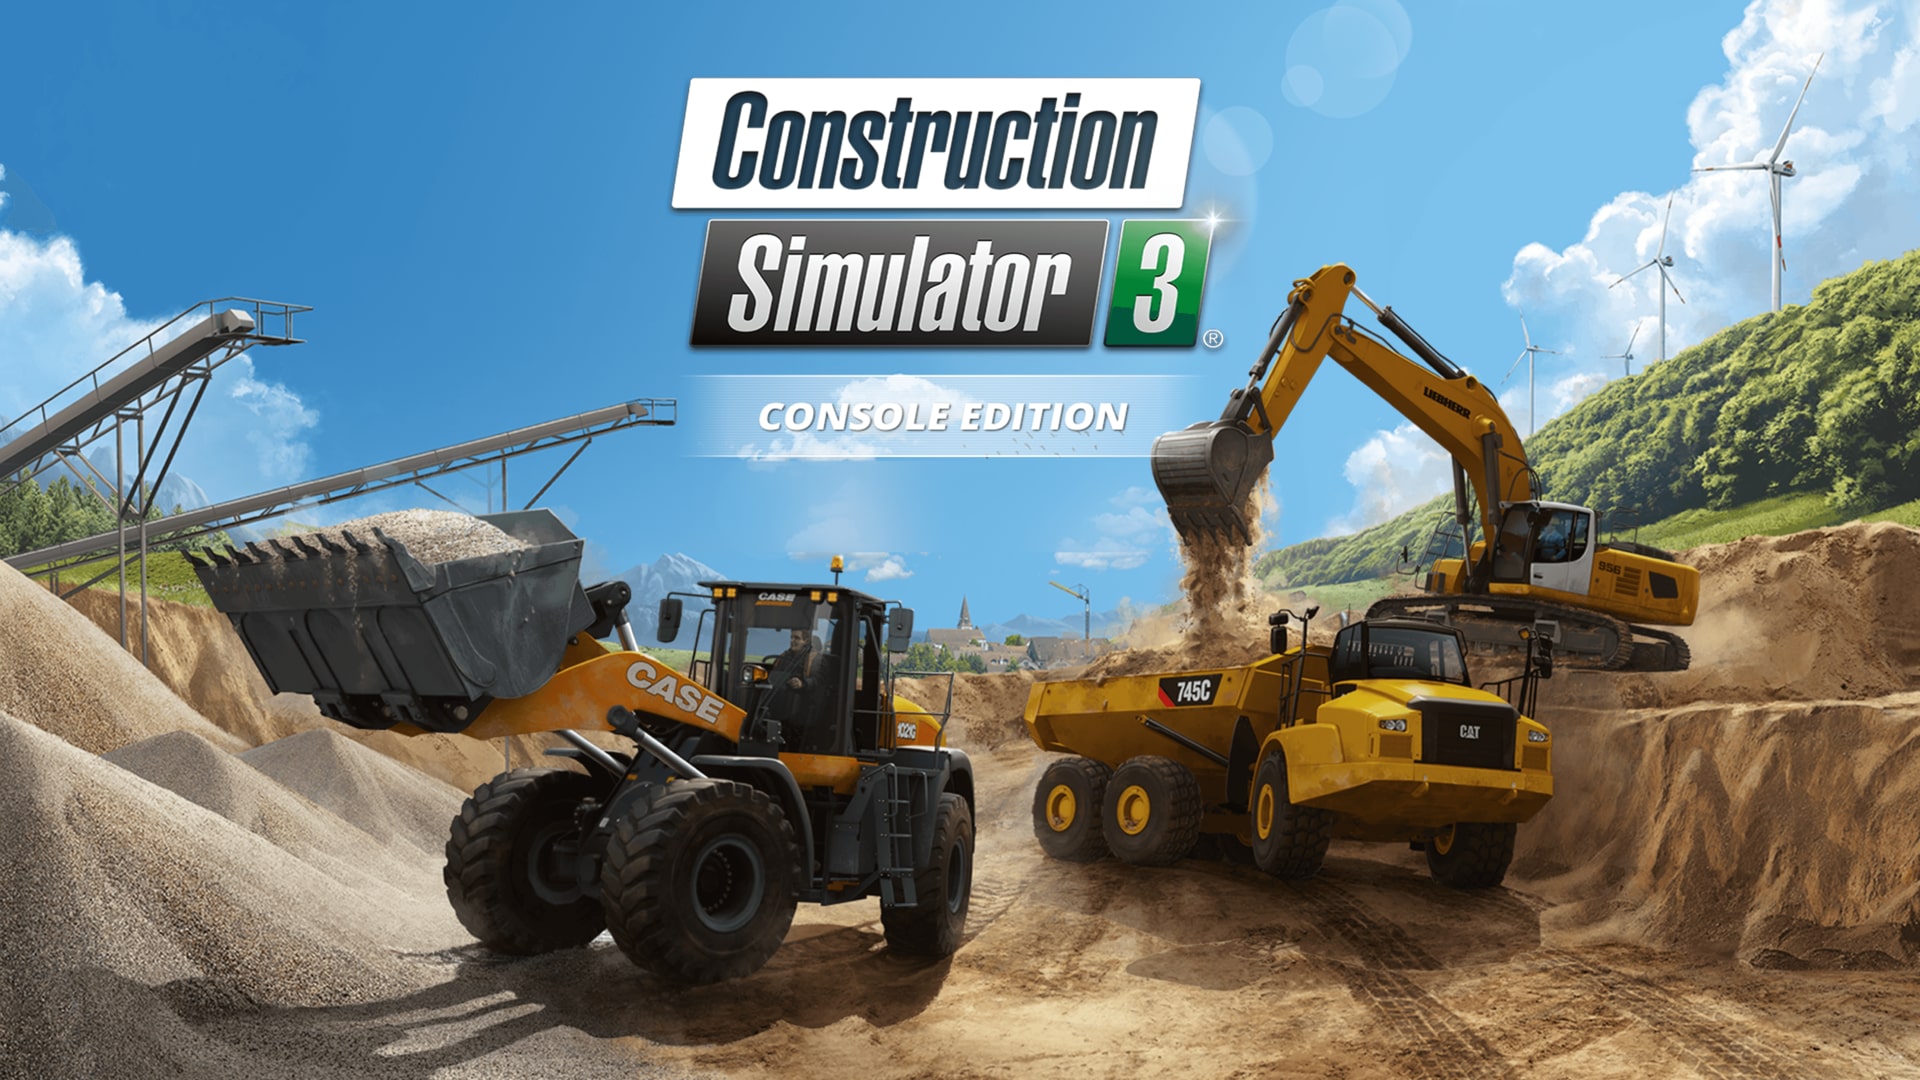 Construction Simulator 3 - Console Edition (日语, 韩语, 简体中文, 繁体中文, 英语)